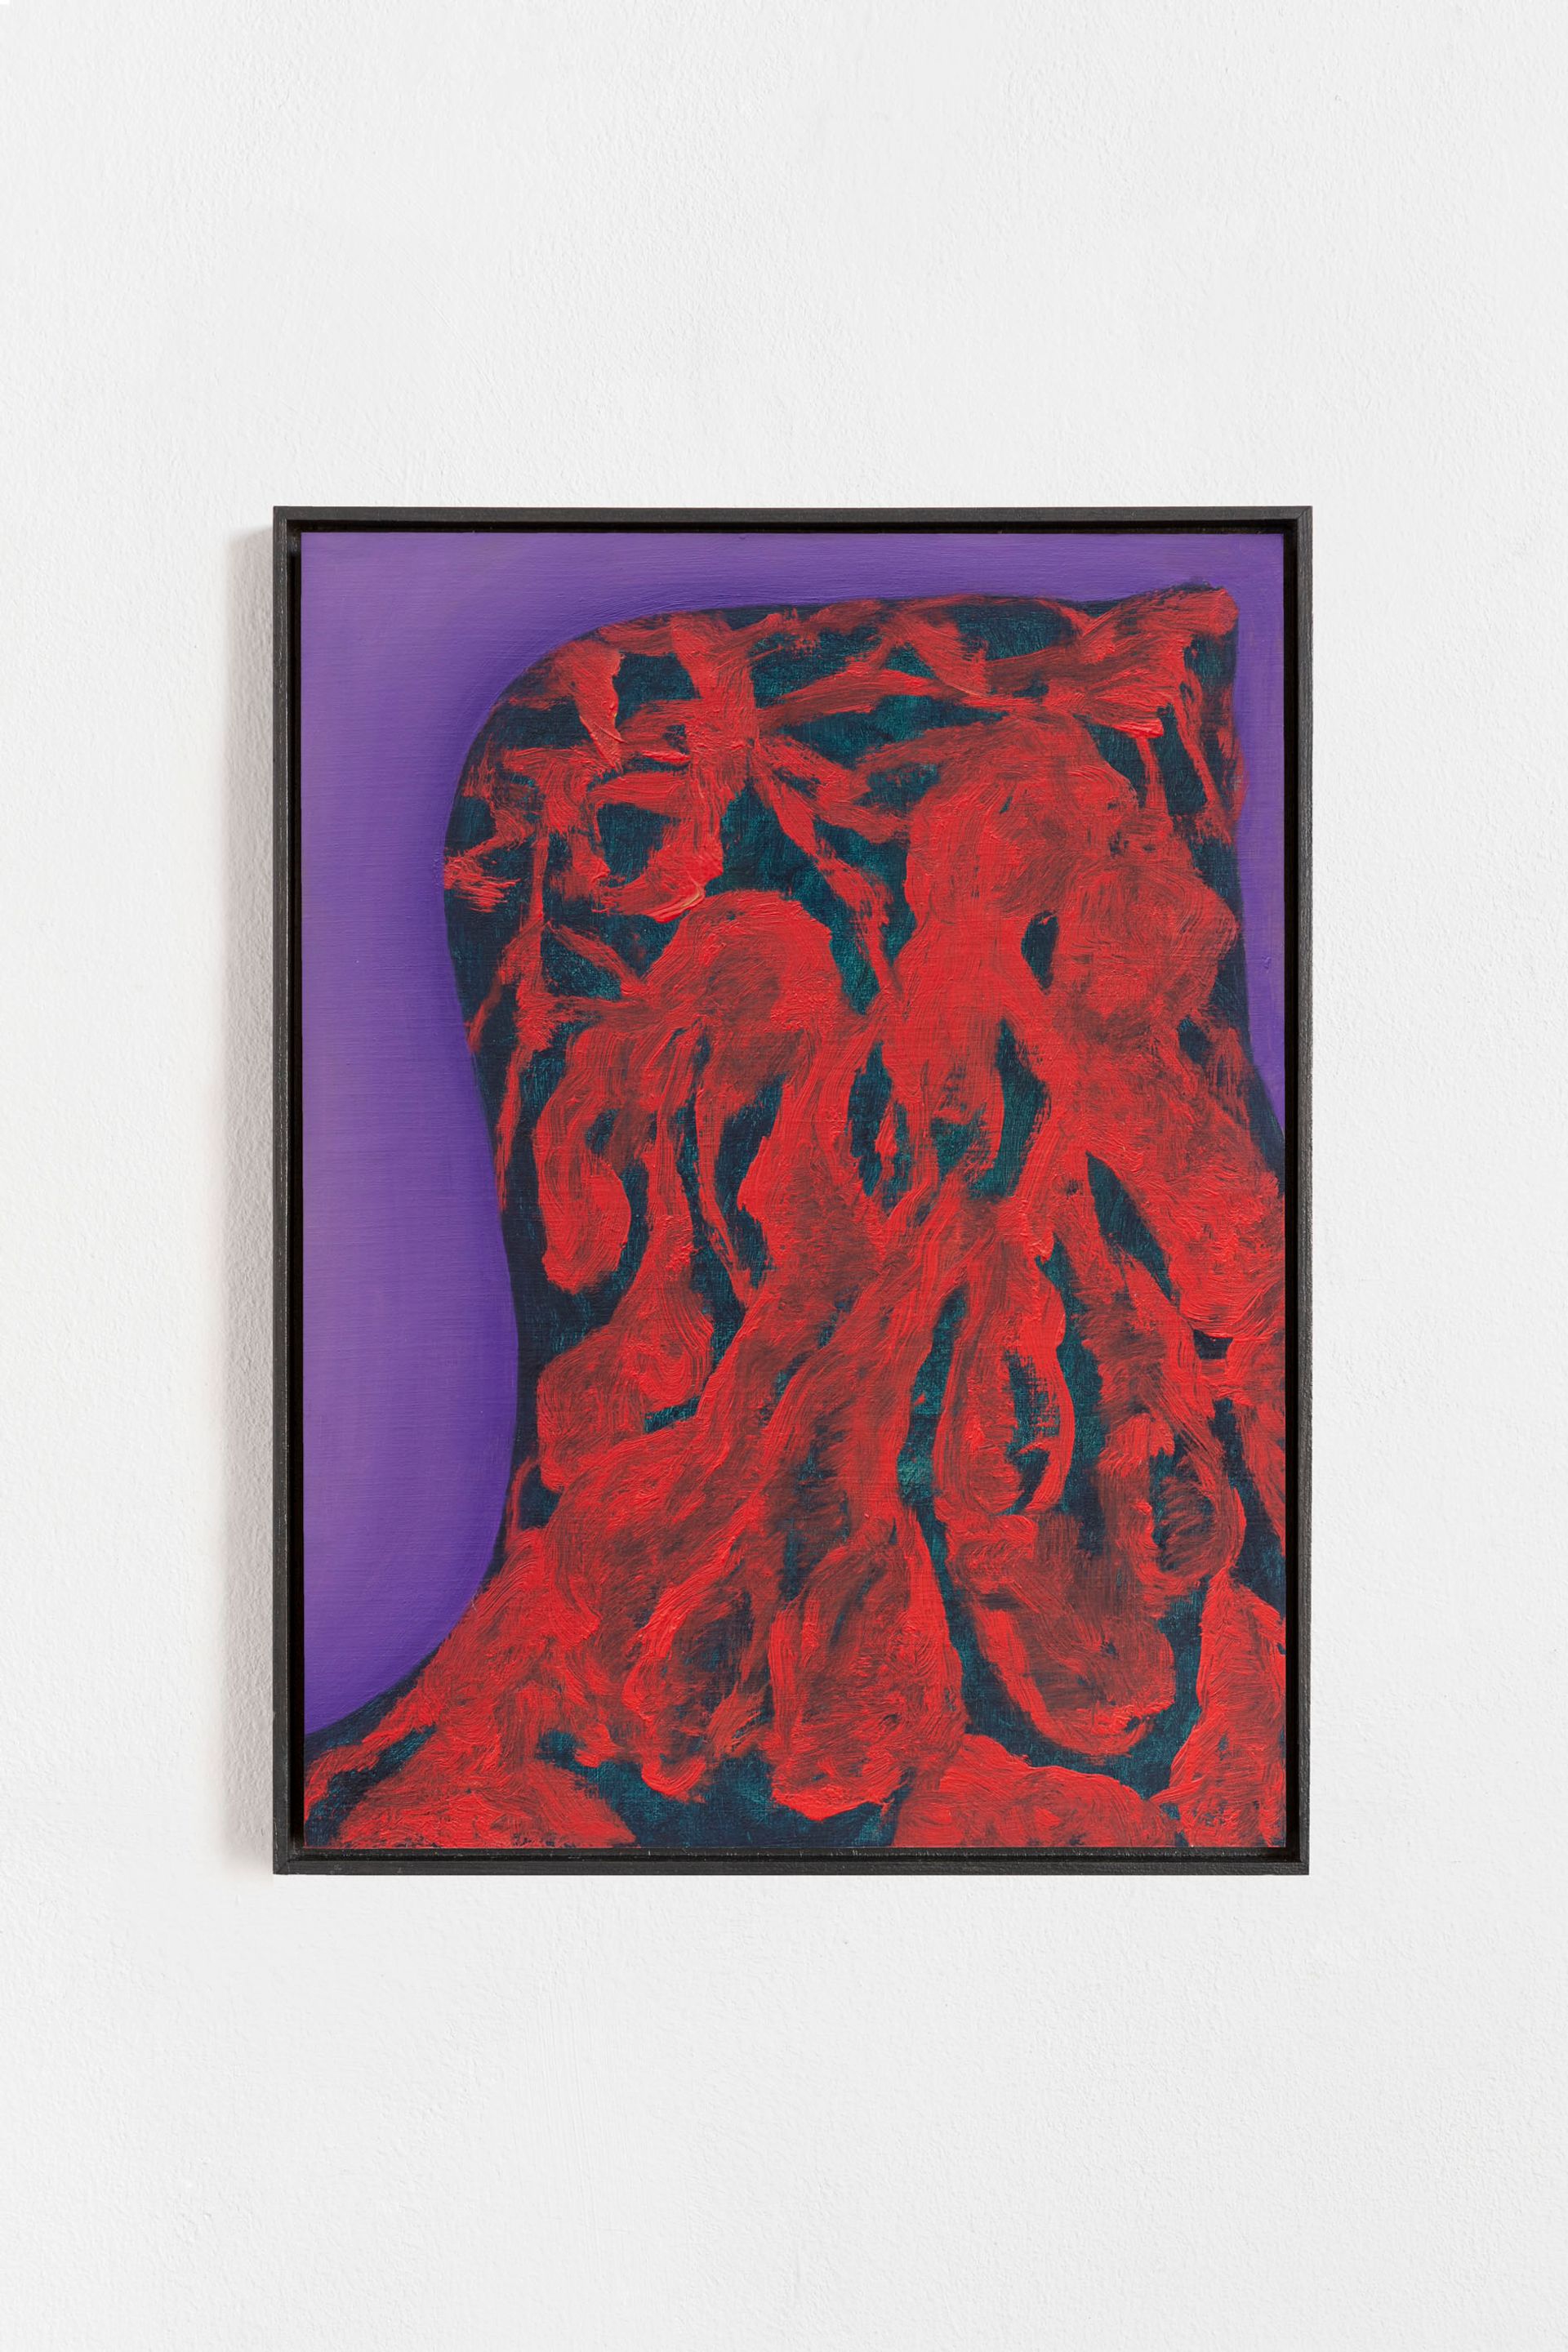 Veronika Hilger, Untitled, 2021, Oil on paper on MDF in artists frame, 39.6 x 29.6 cm photo: Sebastian Kissel